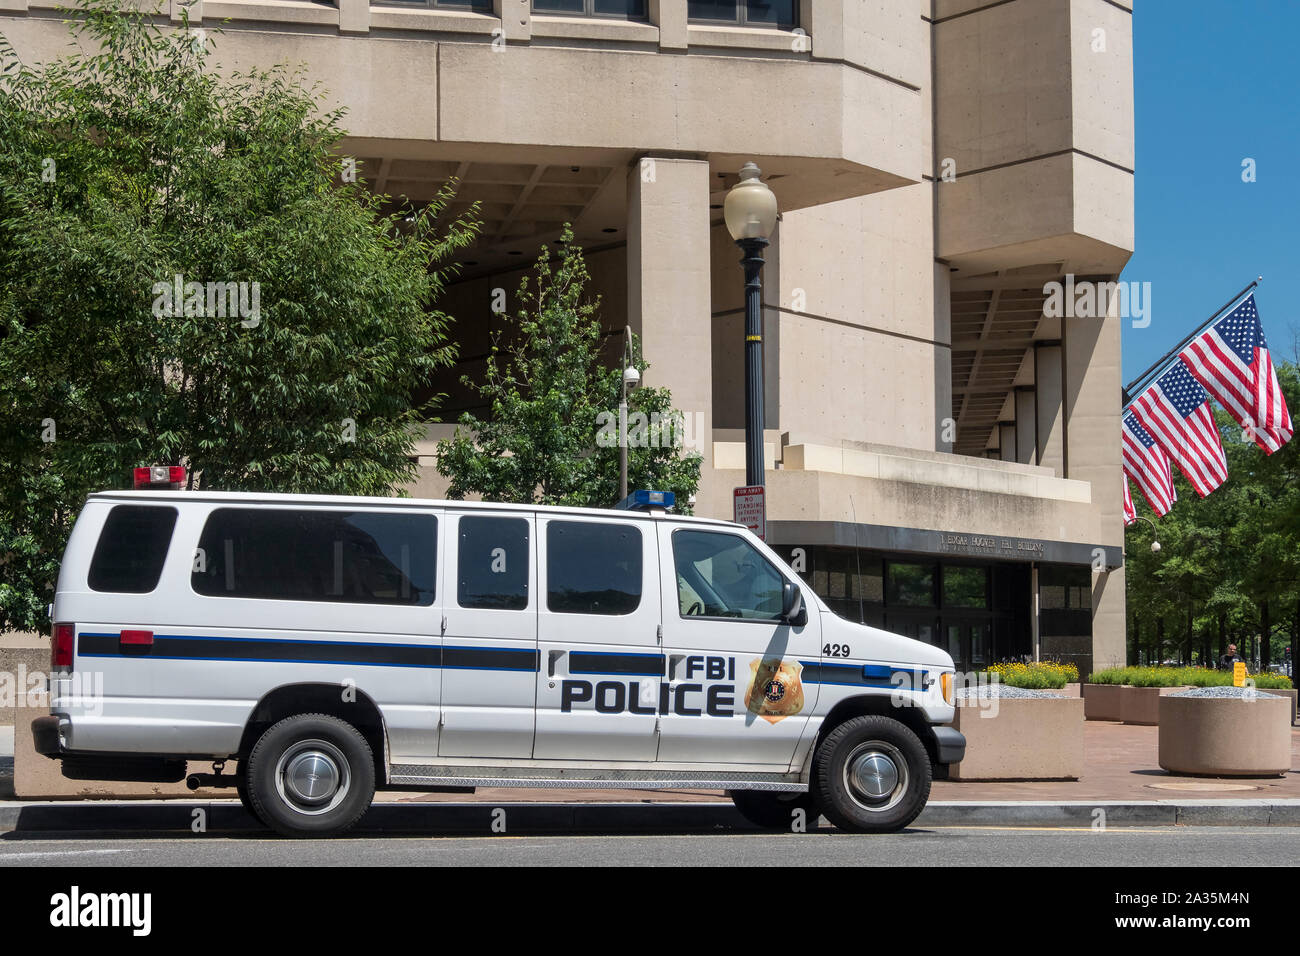 FBI Police Vehicle outside the J Edgar Hoover FBI Building, Pennsylvania Avenue, Washington DC, USA Stock Photo